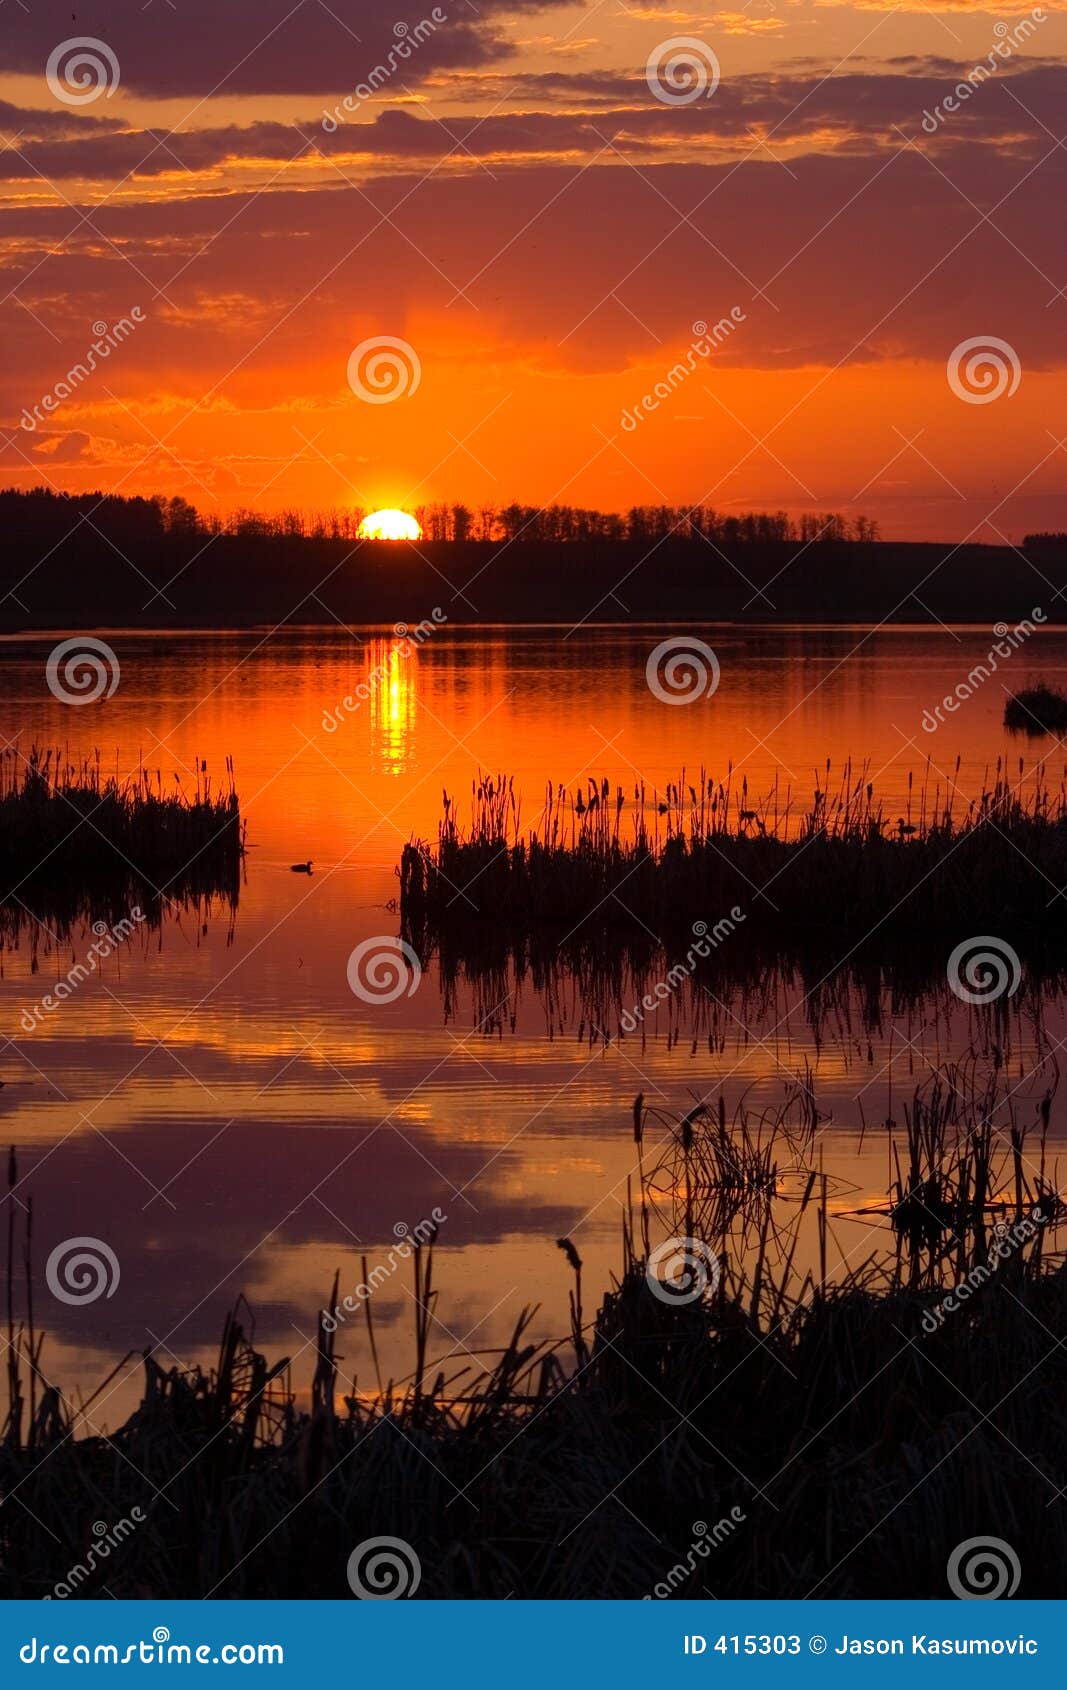 Placidity stock image. Image of beauty, sunset, tranquility - 415303